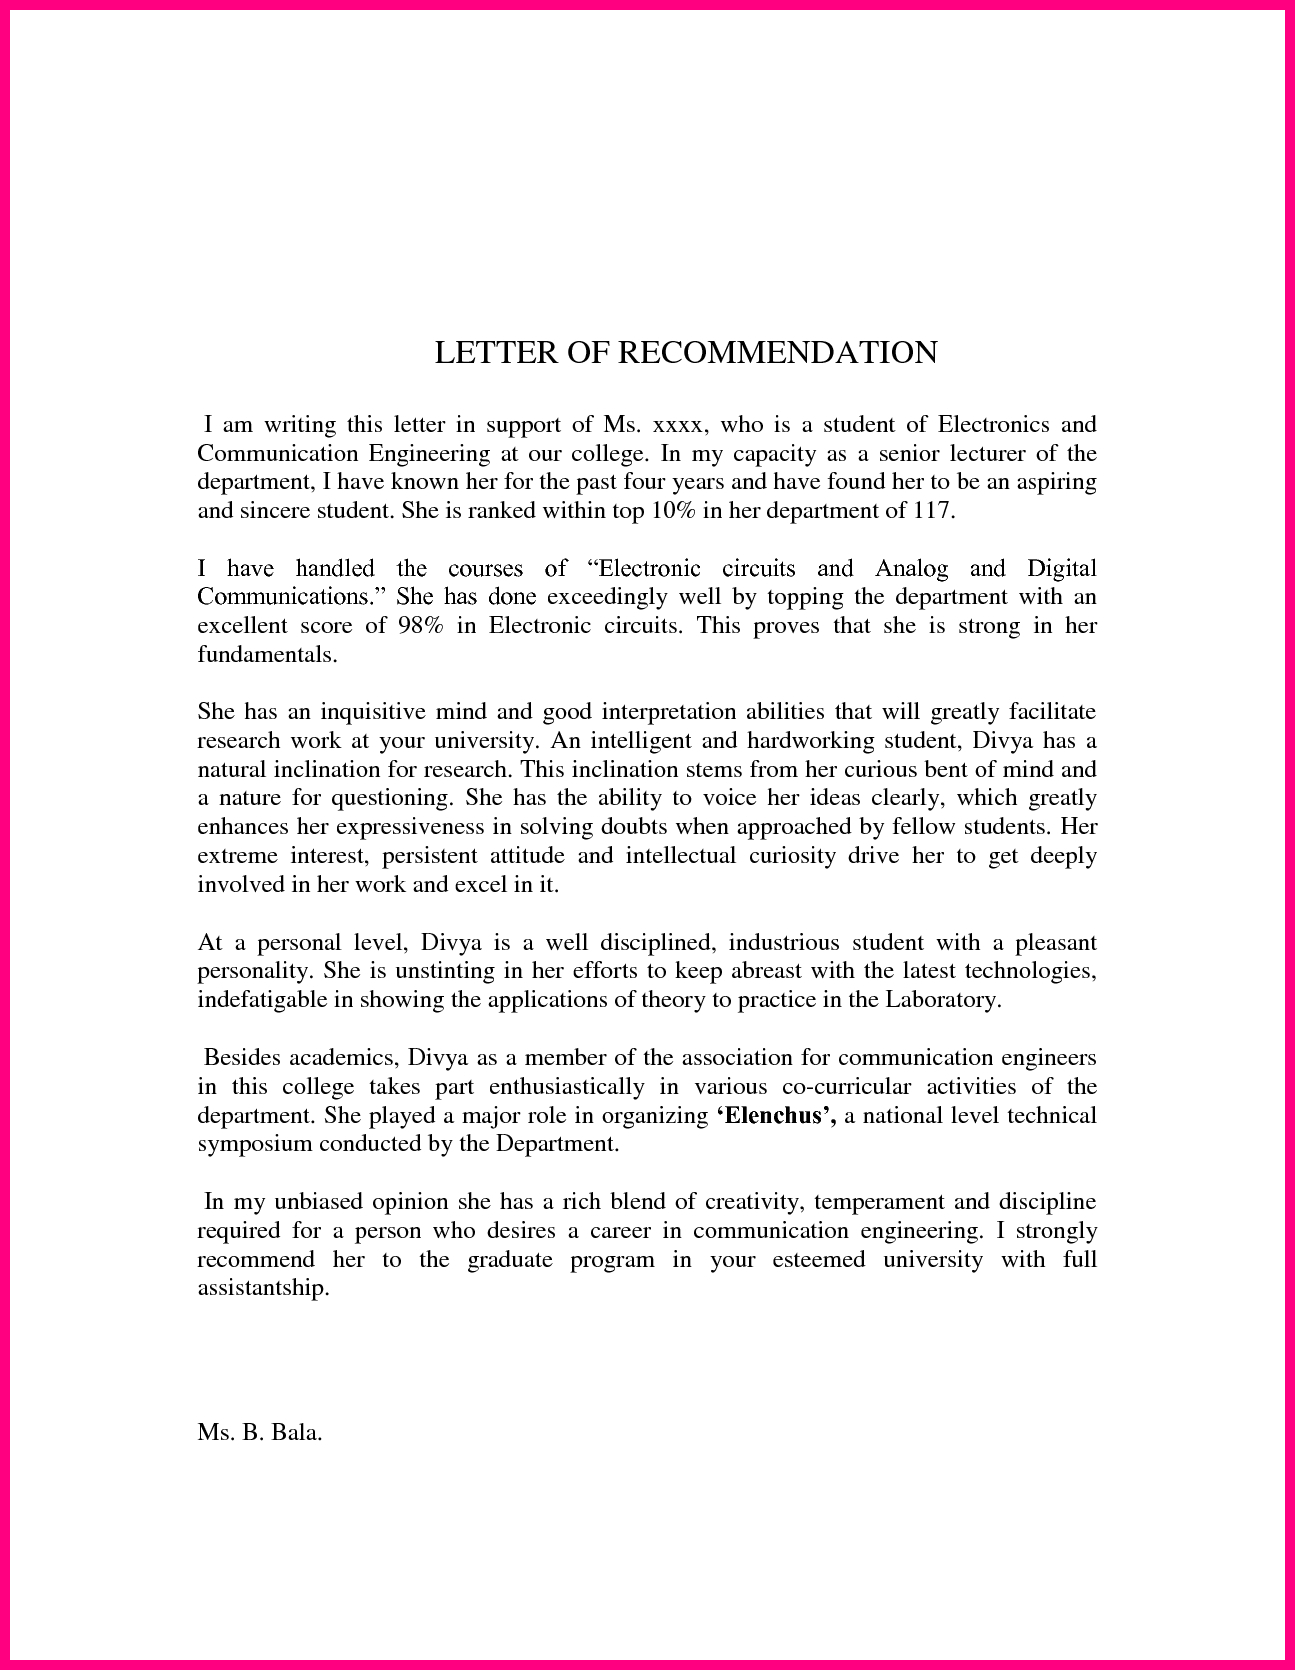 Pt School Letter Of Recommendation Debandje intended for size 1295 X 1670